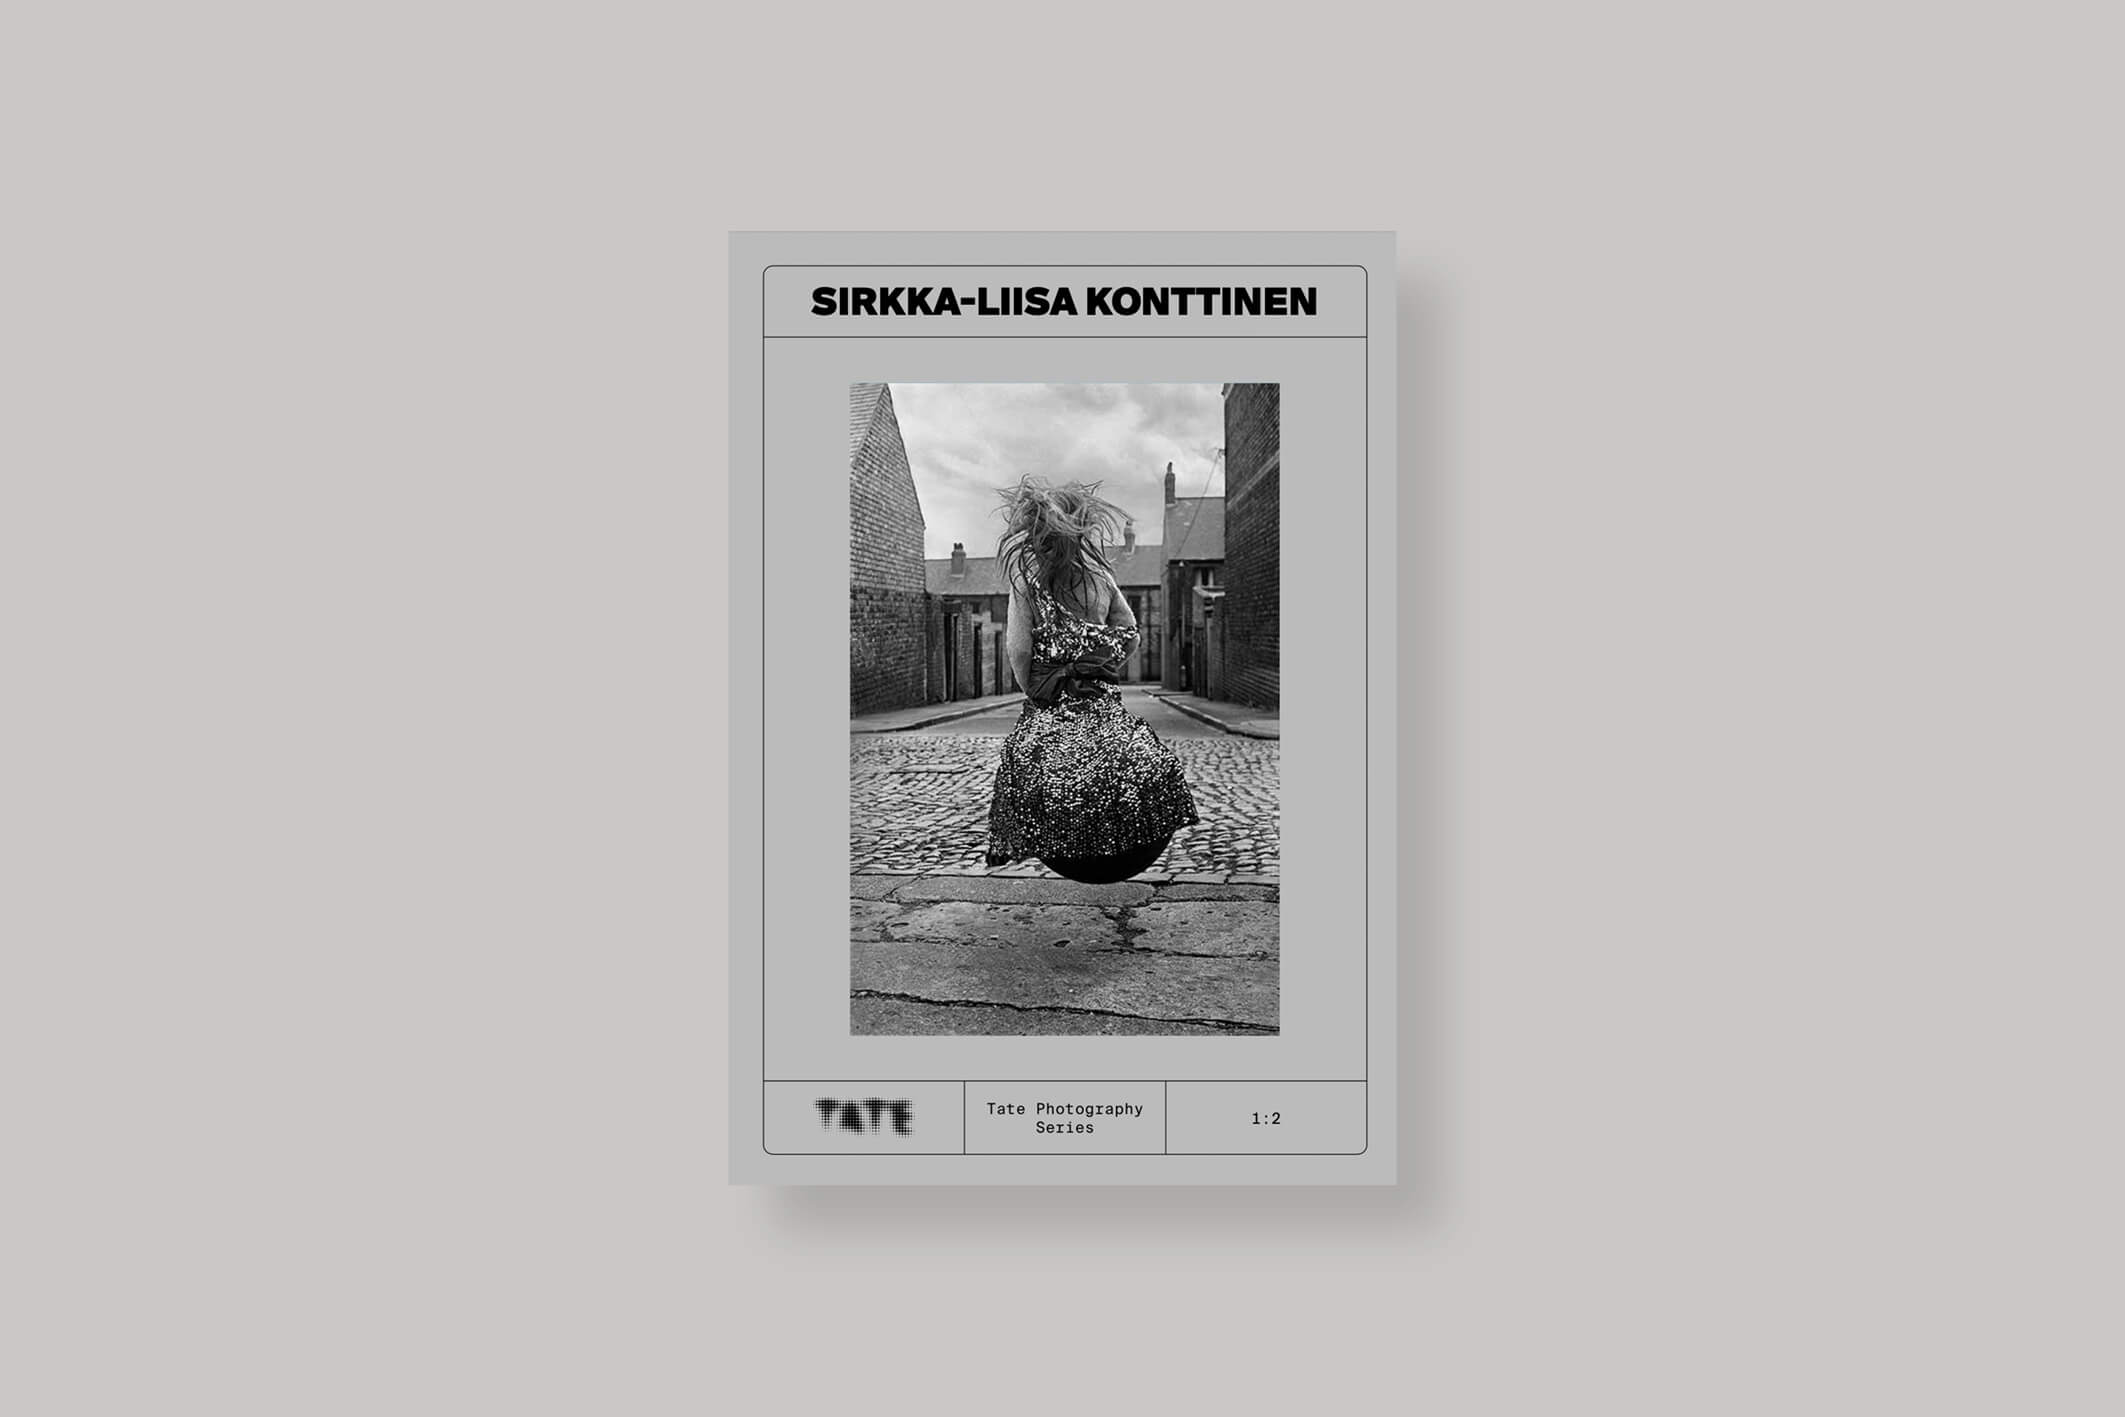 Tate-photography-series-1-2-Sirkka-Liisa-Konttinnen-Tate-Publishing-cover